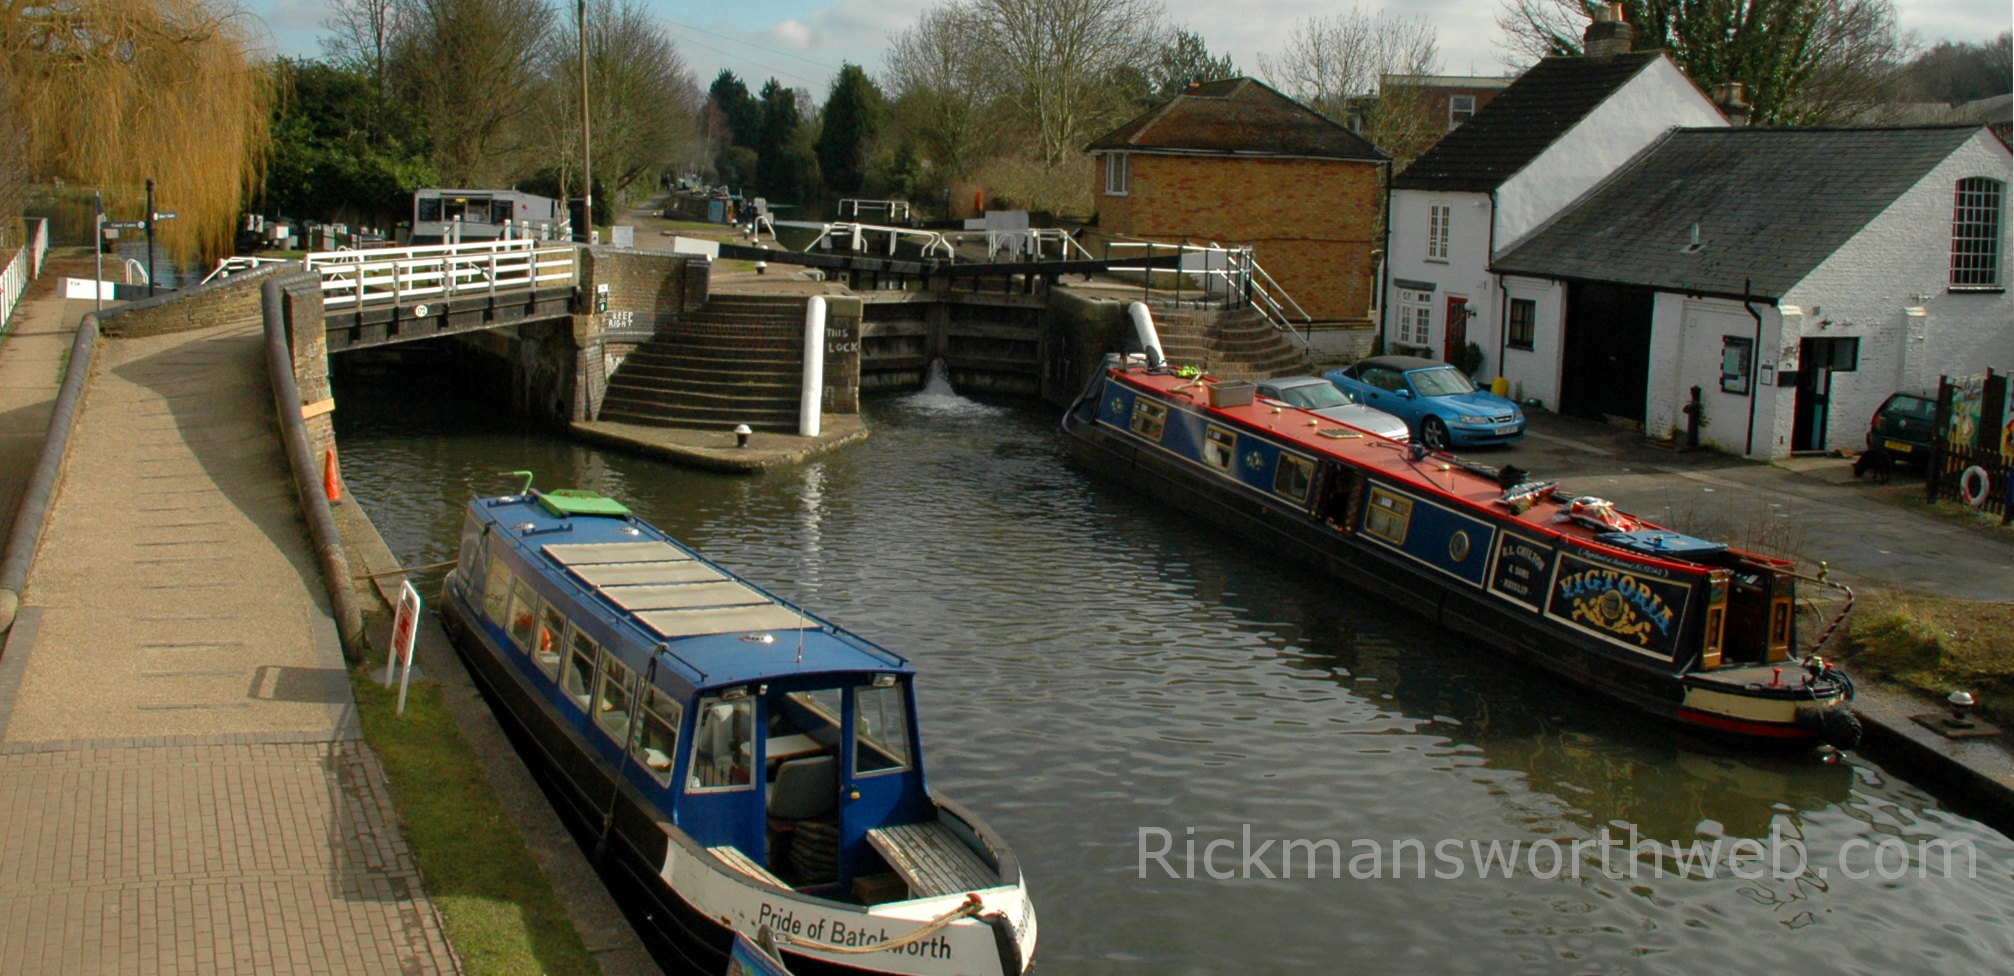 Canal lock, Rickmansworth